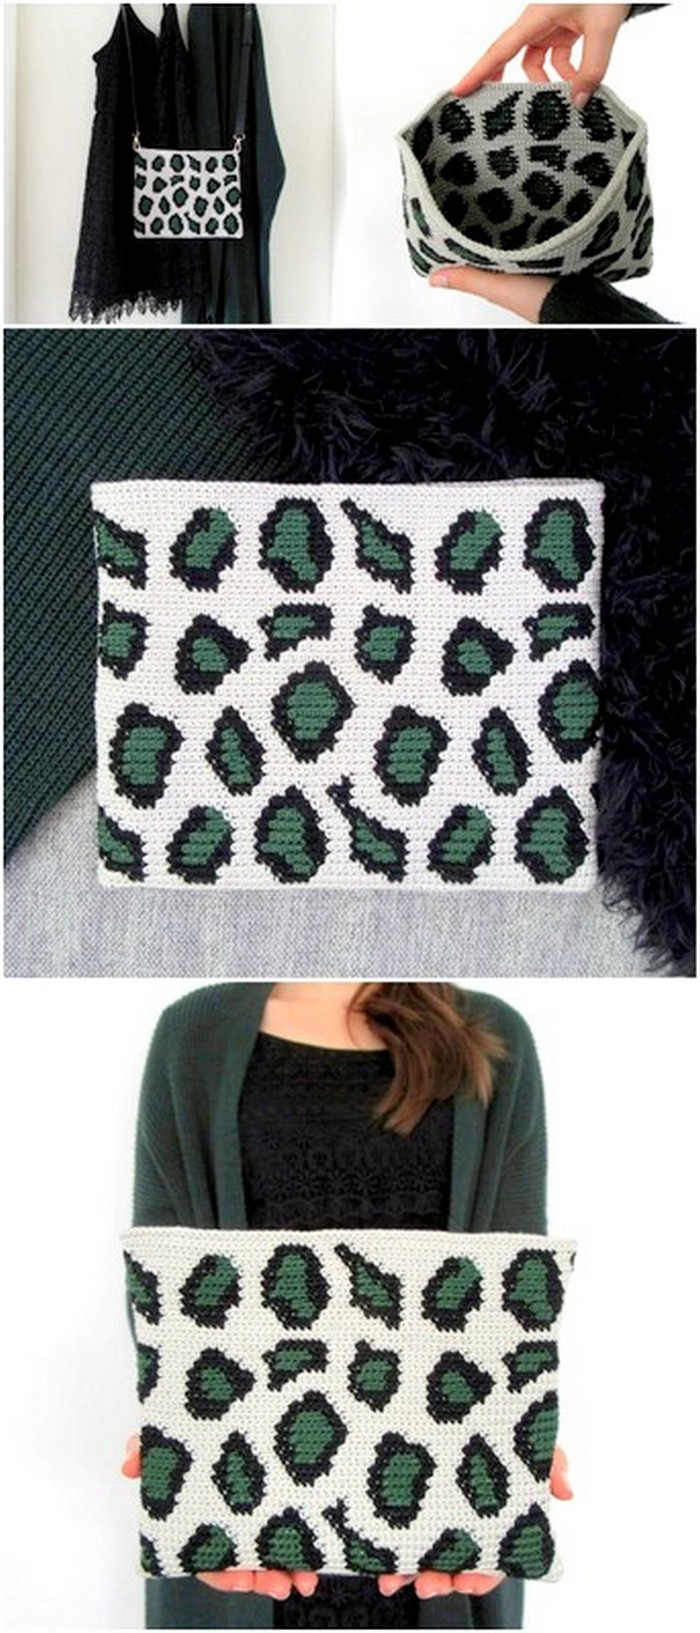 DIY crochet pouch idea